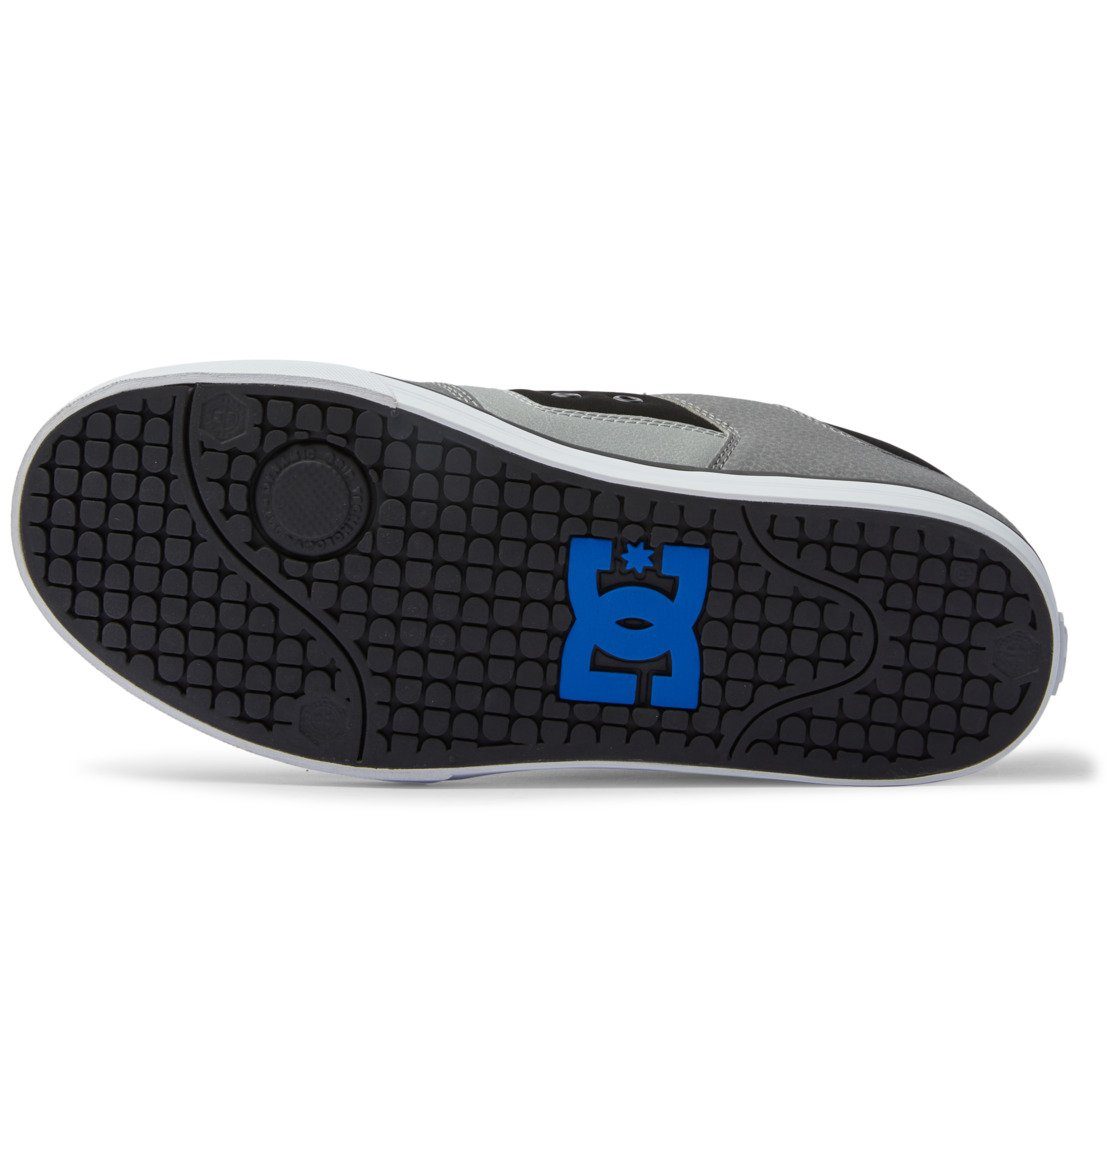 Shoes Sneaker Black/Grey/Blue Pure DC